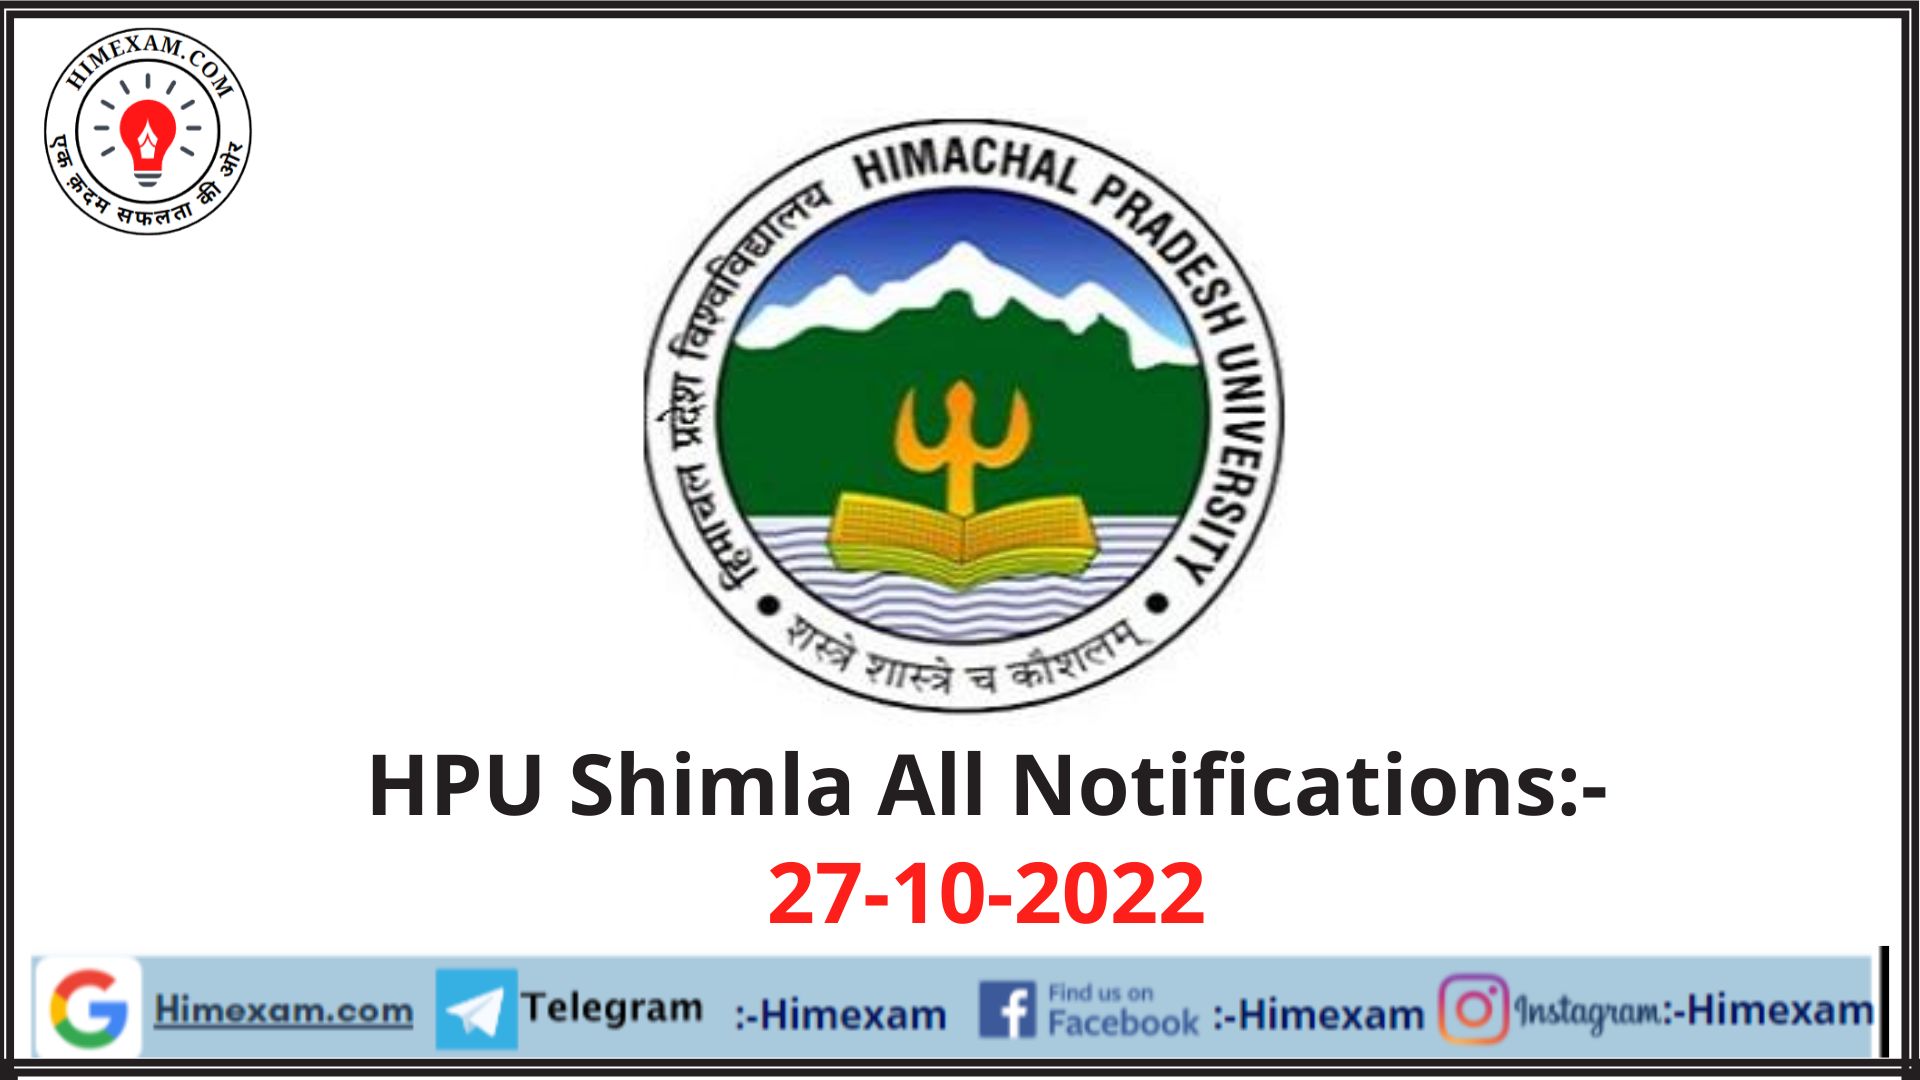 HPU Shimla All Notifications:- 27-10-2022